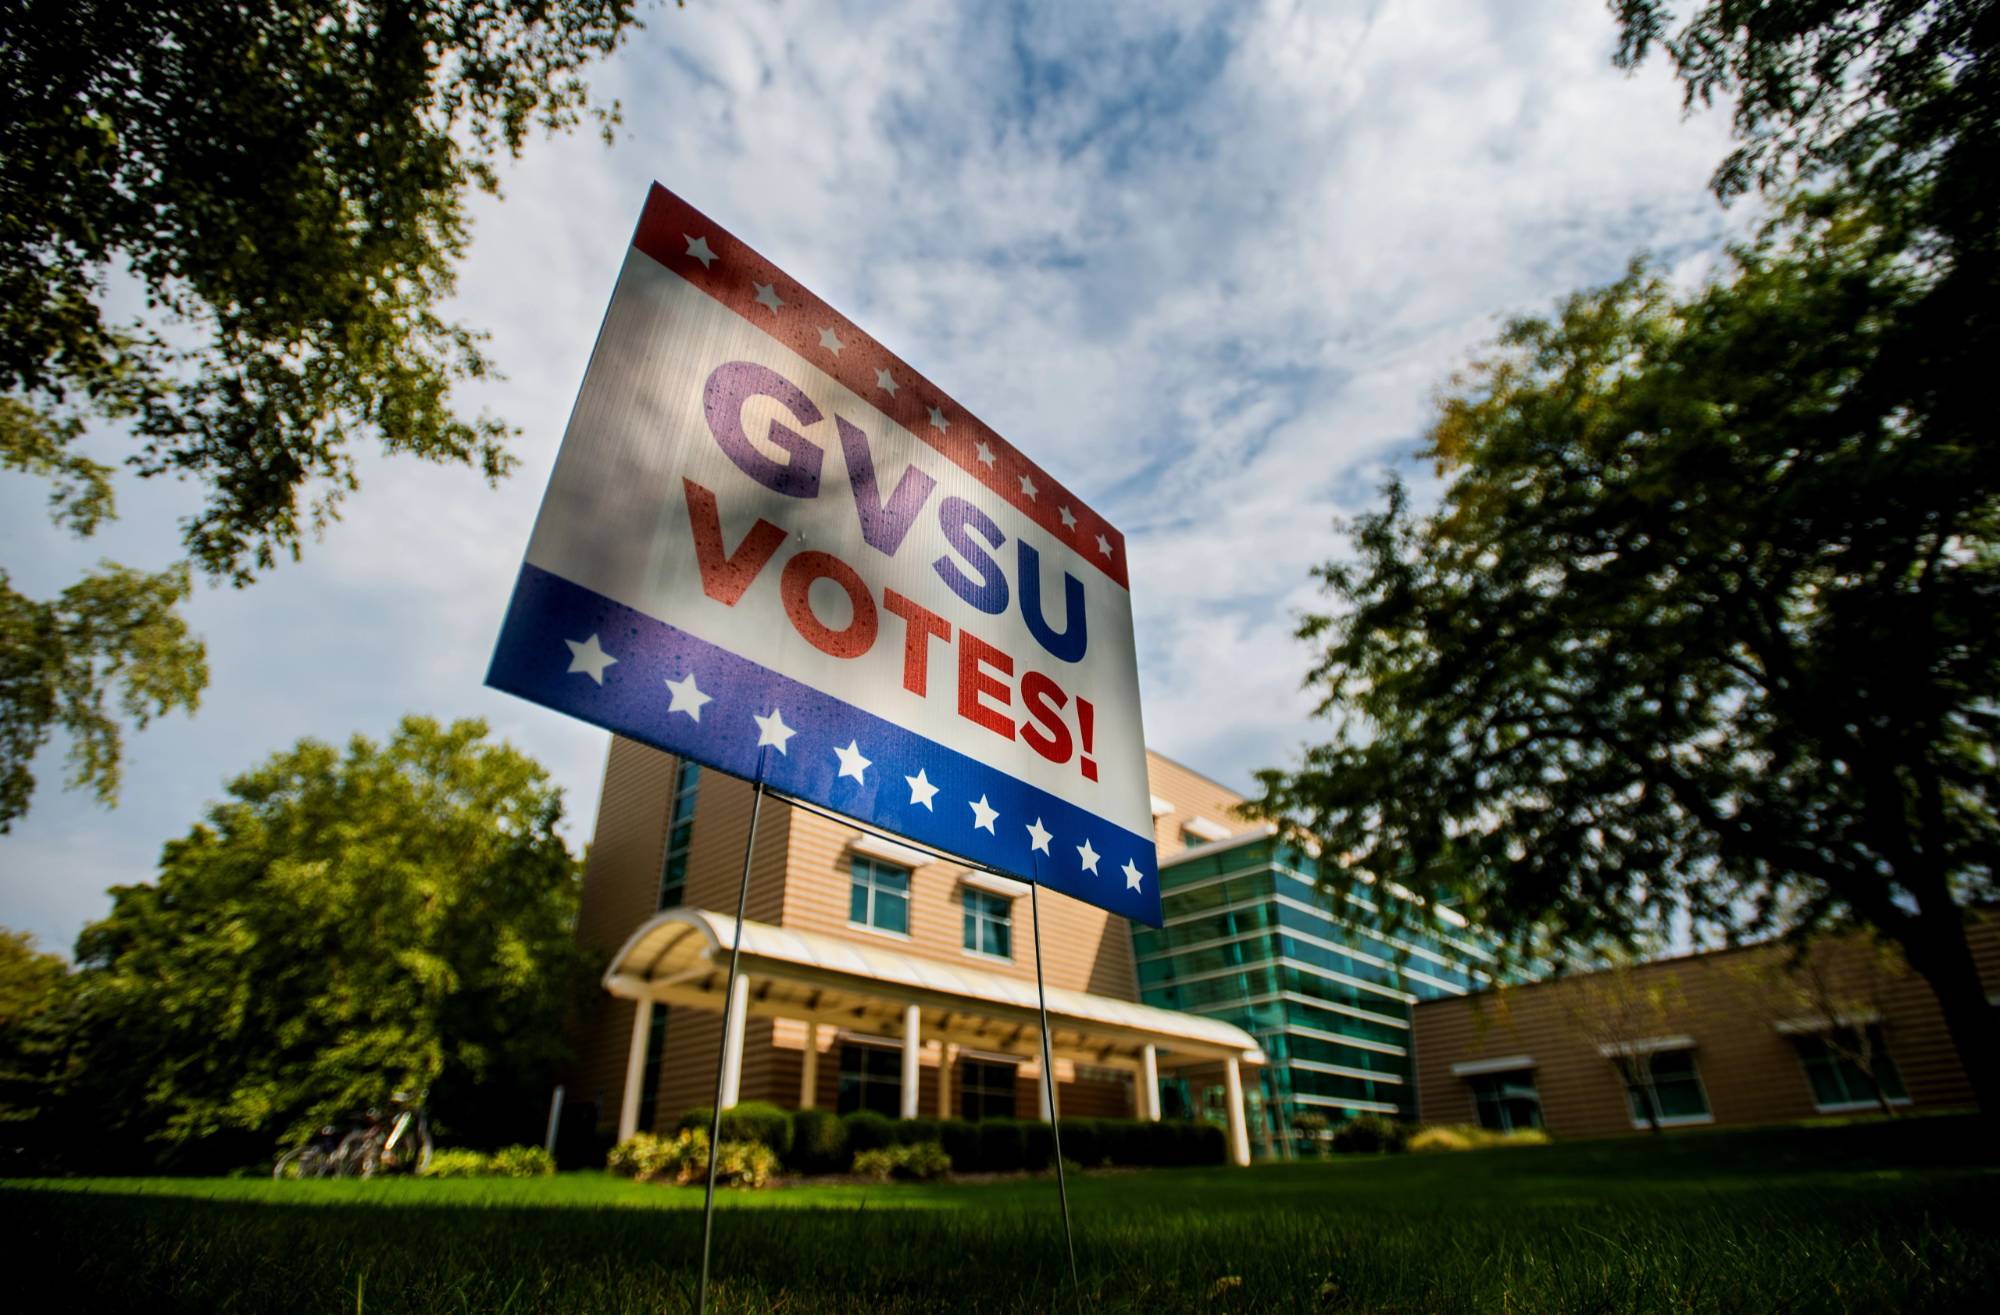 GVSU Votes! yard sign